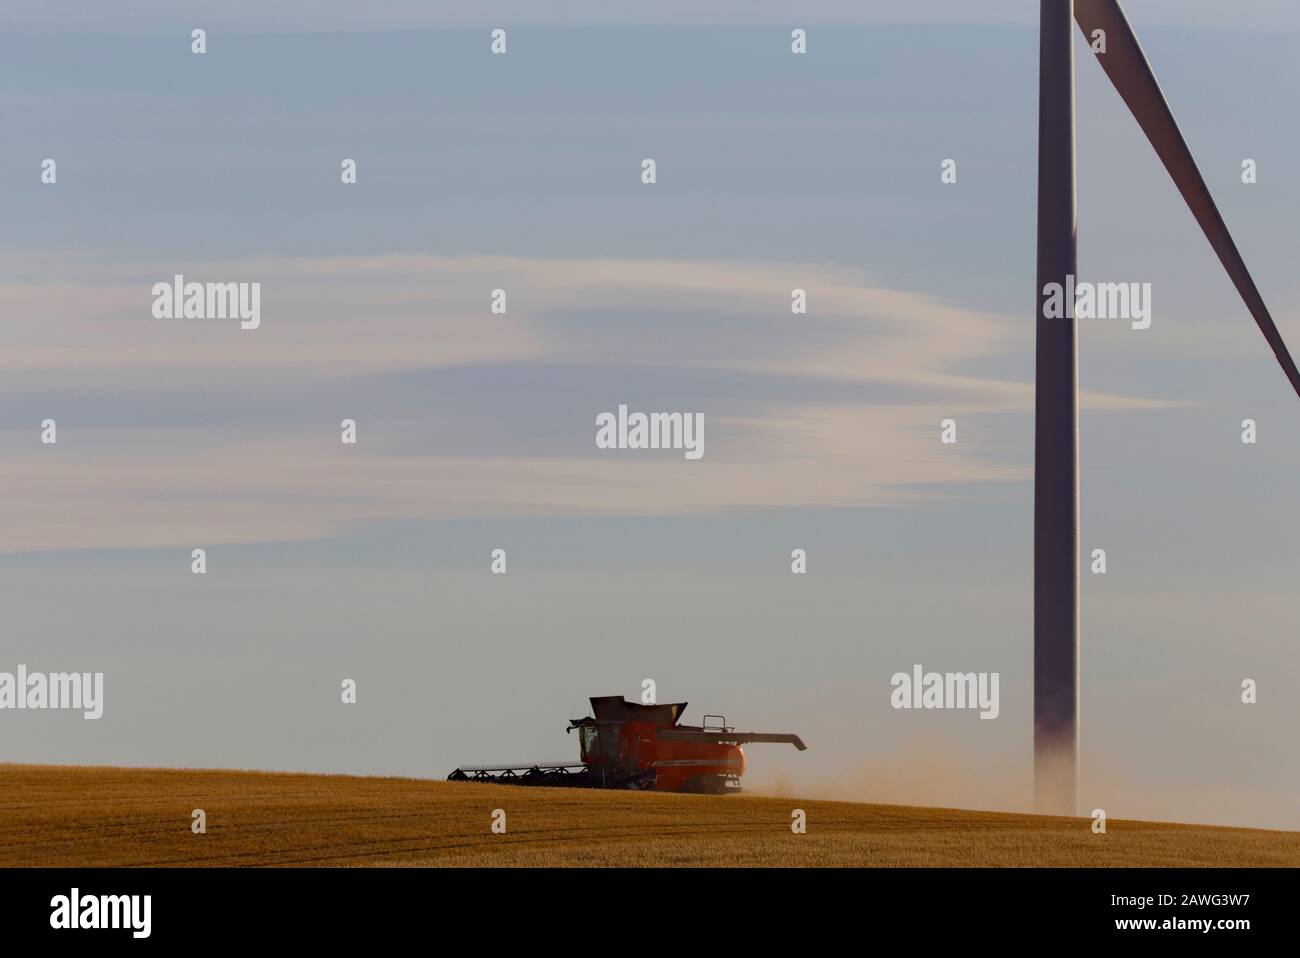 A combine harvester harvesting oats around the base of a wind turbine near Jamestown South Australia Stock Photo